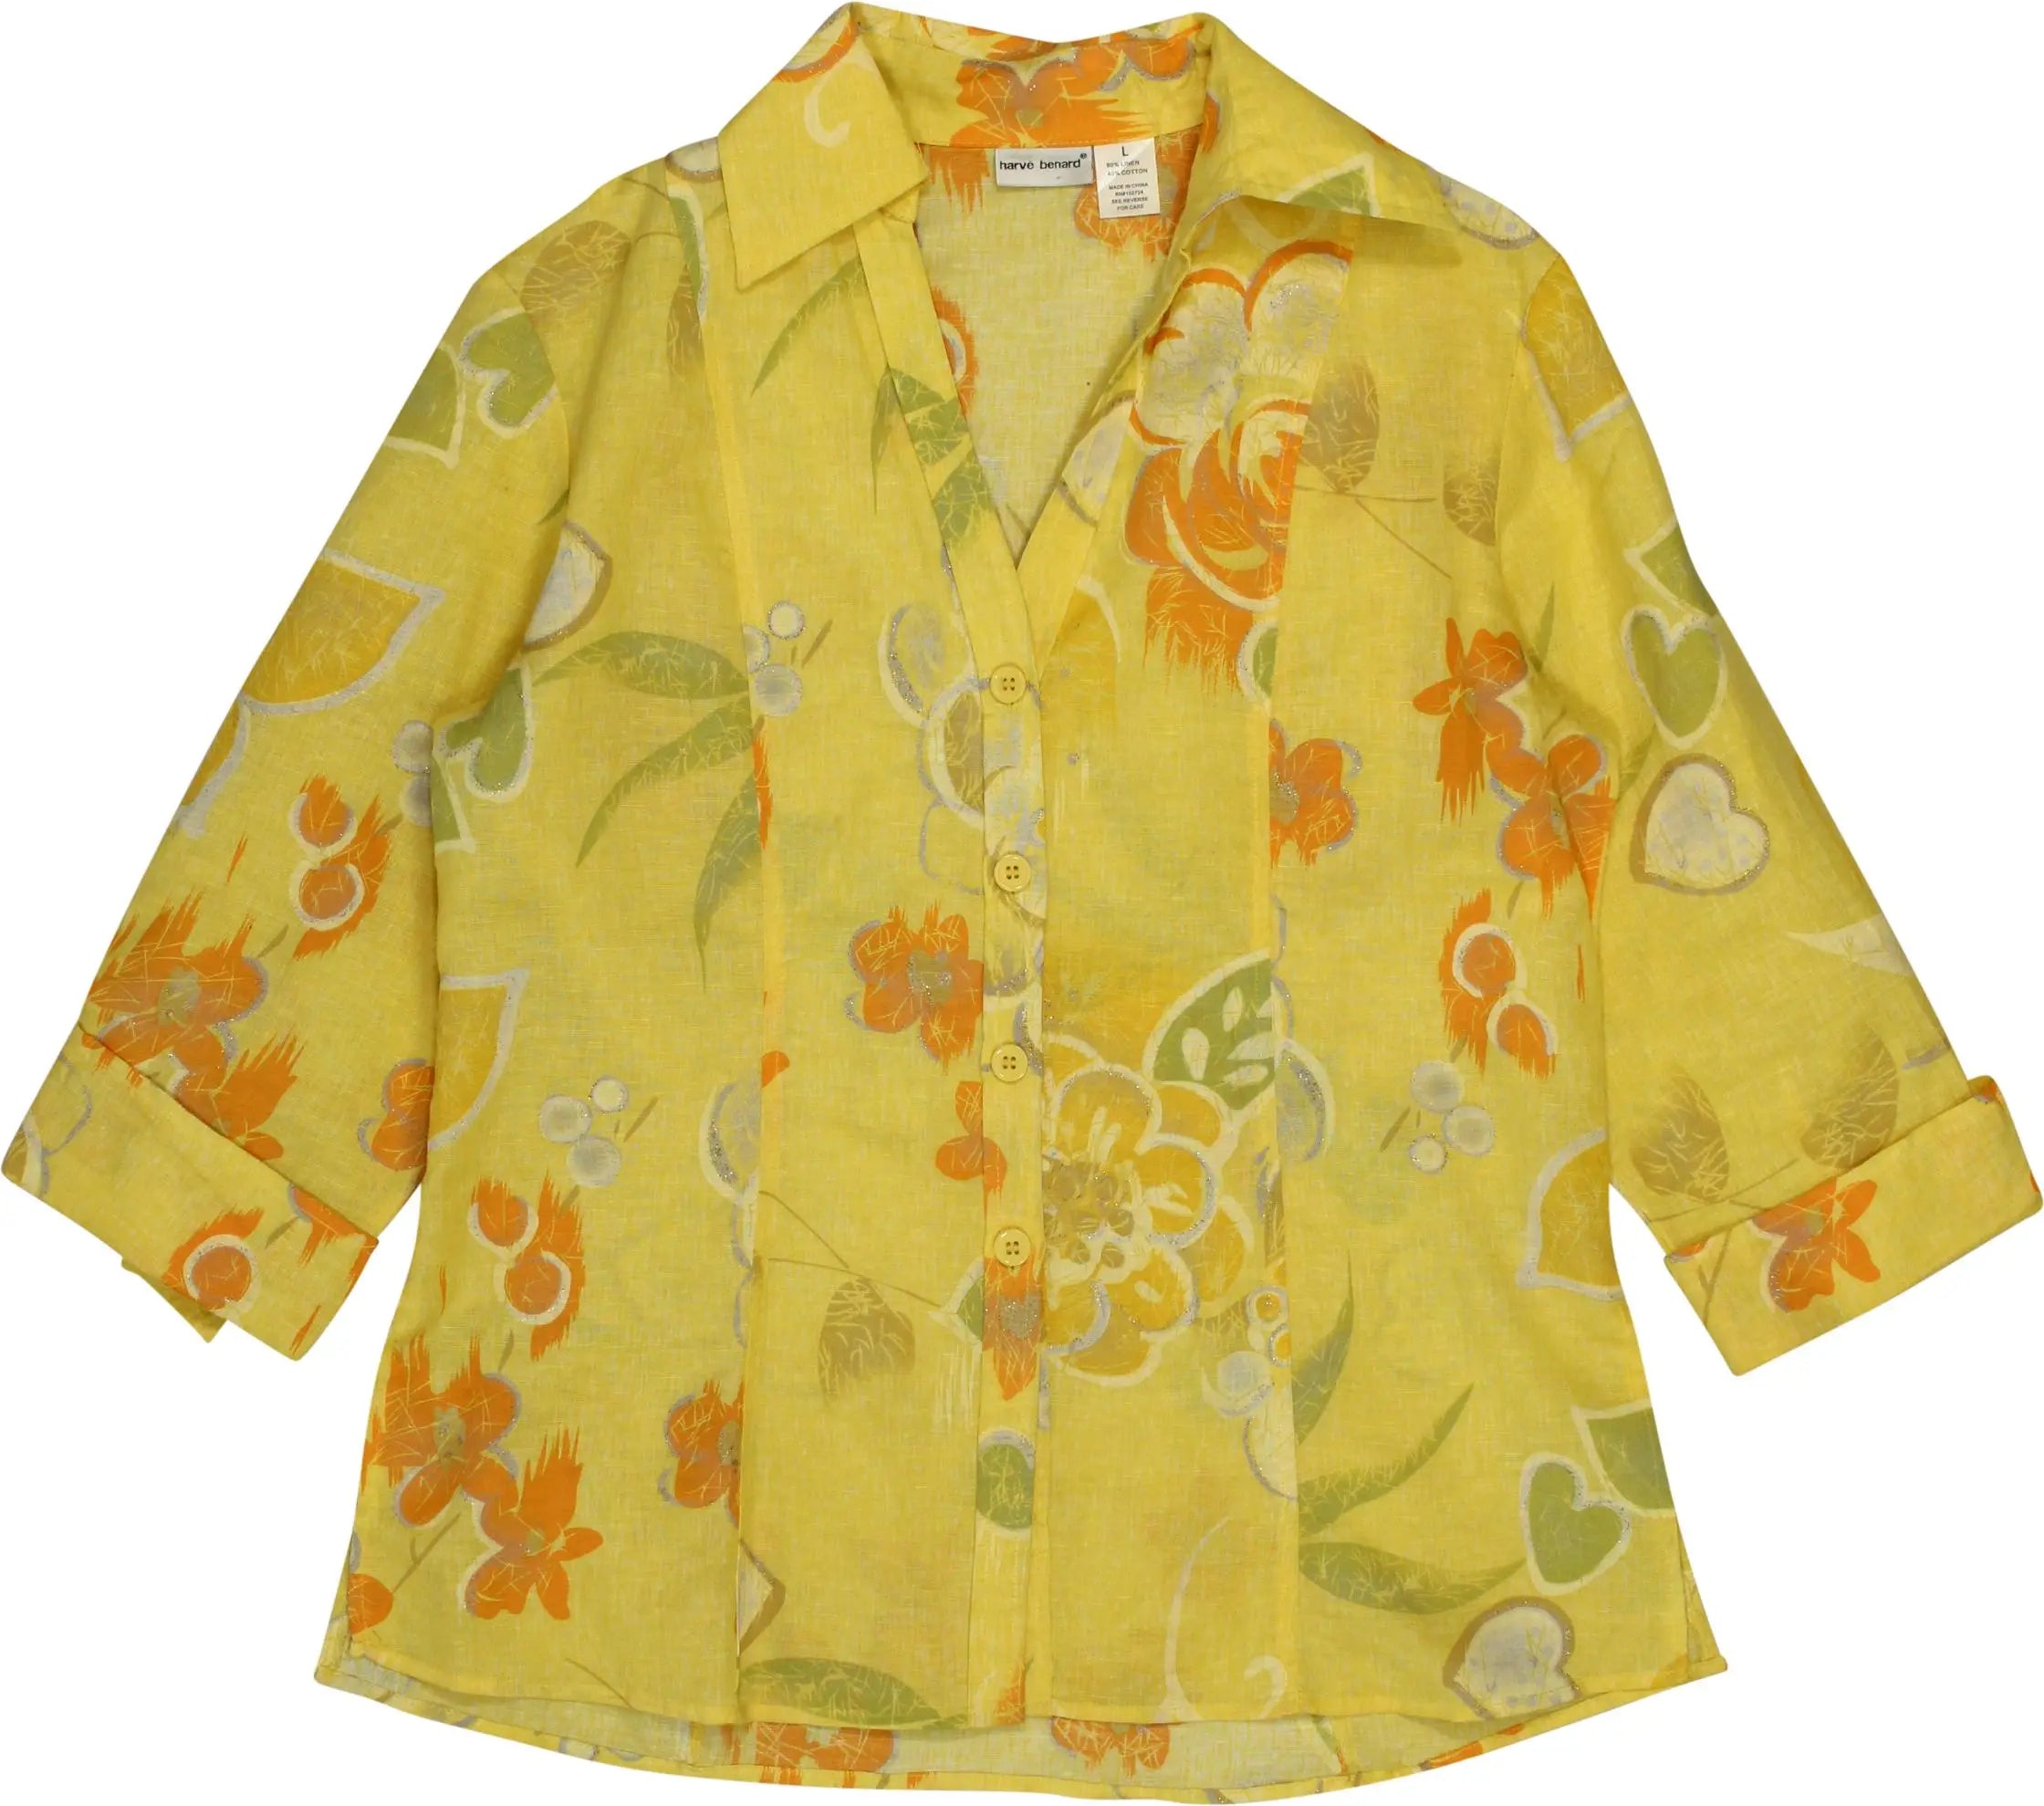 Harve Benard - Linen Blouse- ThriftTale.com - Vintage and second handclothing